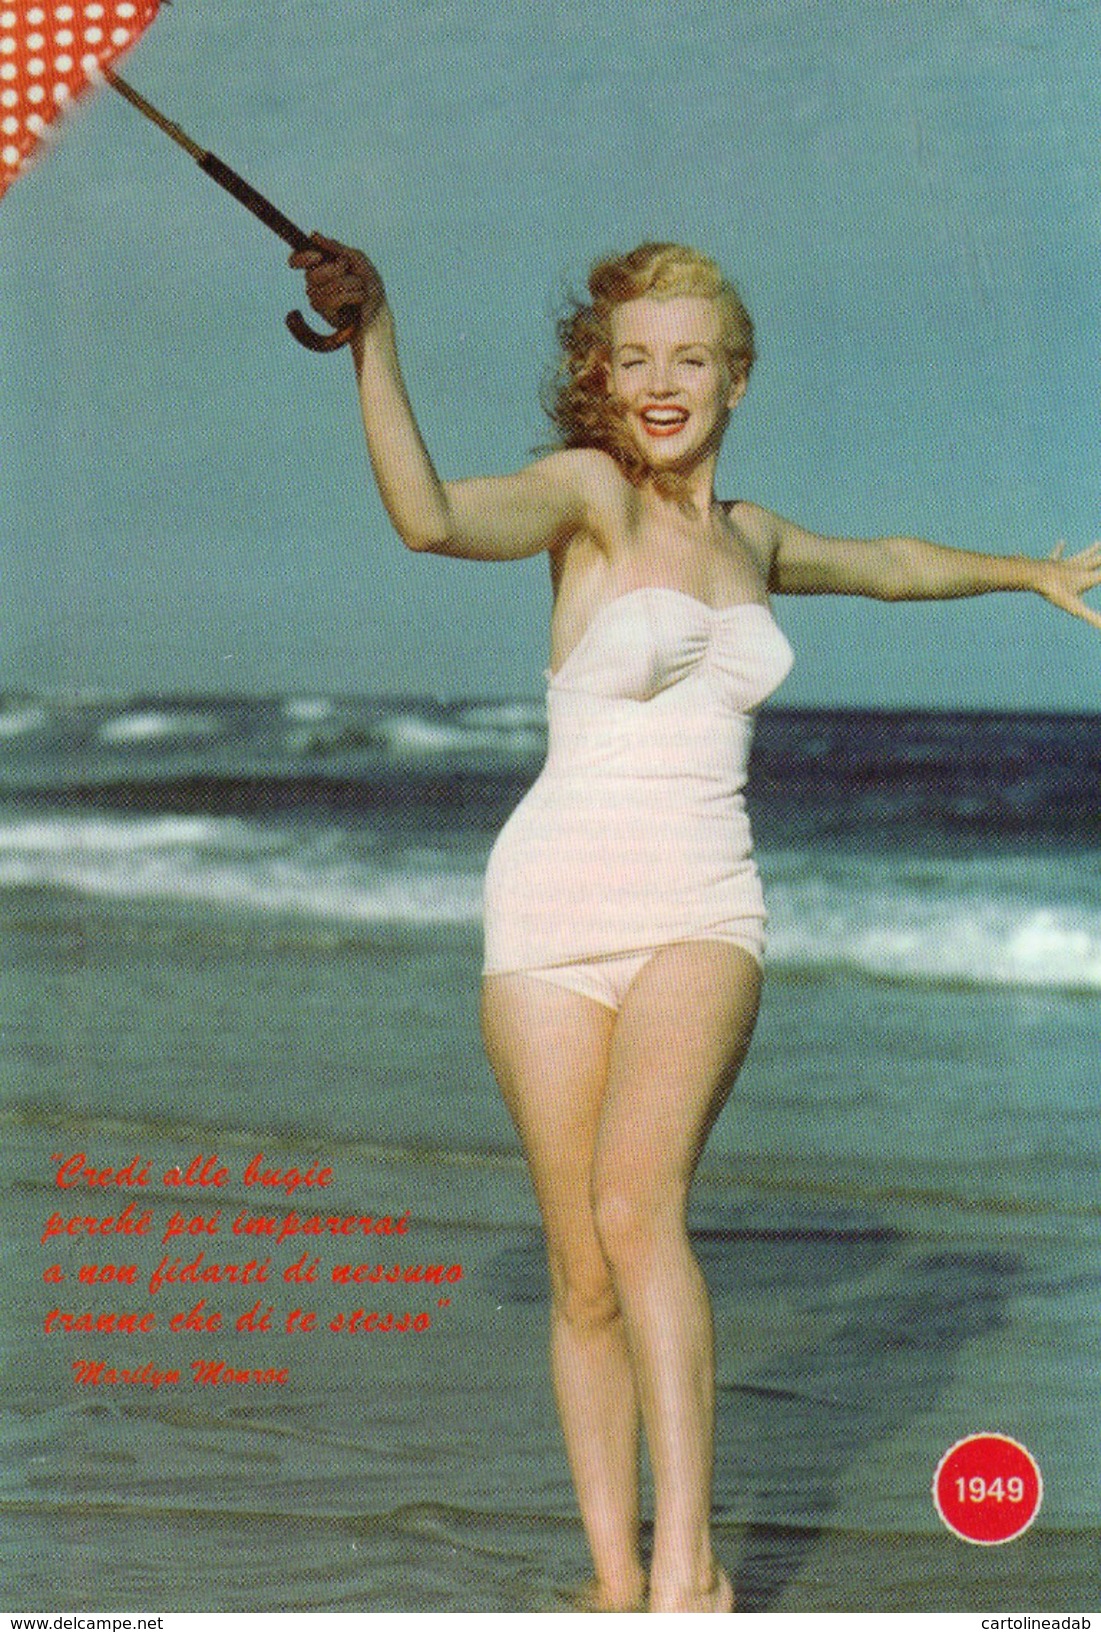 [DC1622] CARTOLINEA - MARILYN MONROE 1962/2012 - CINQUANTENARIO DELLA SCOMPARSA - Famous Ladies